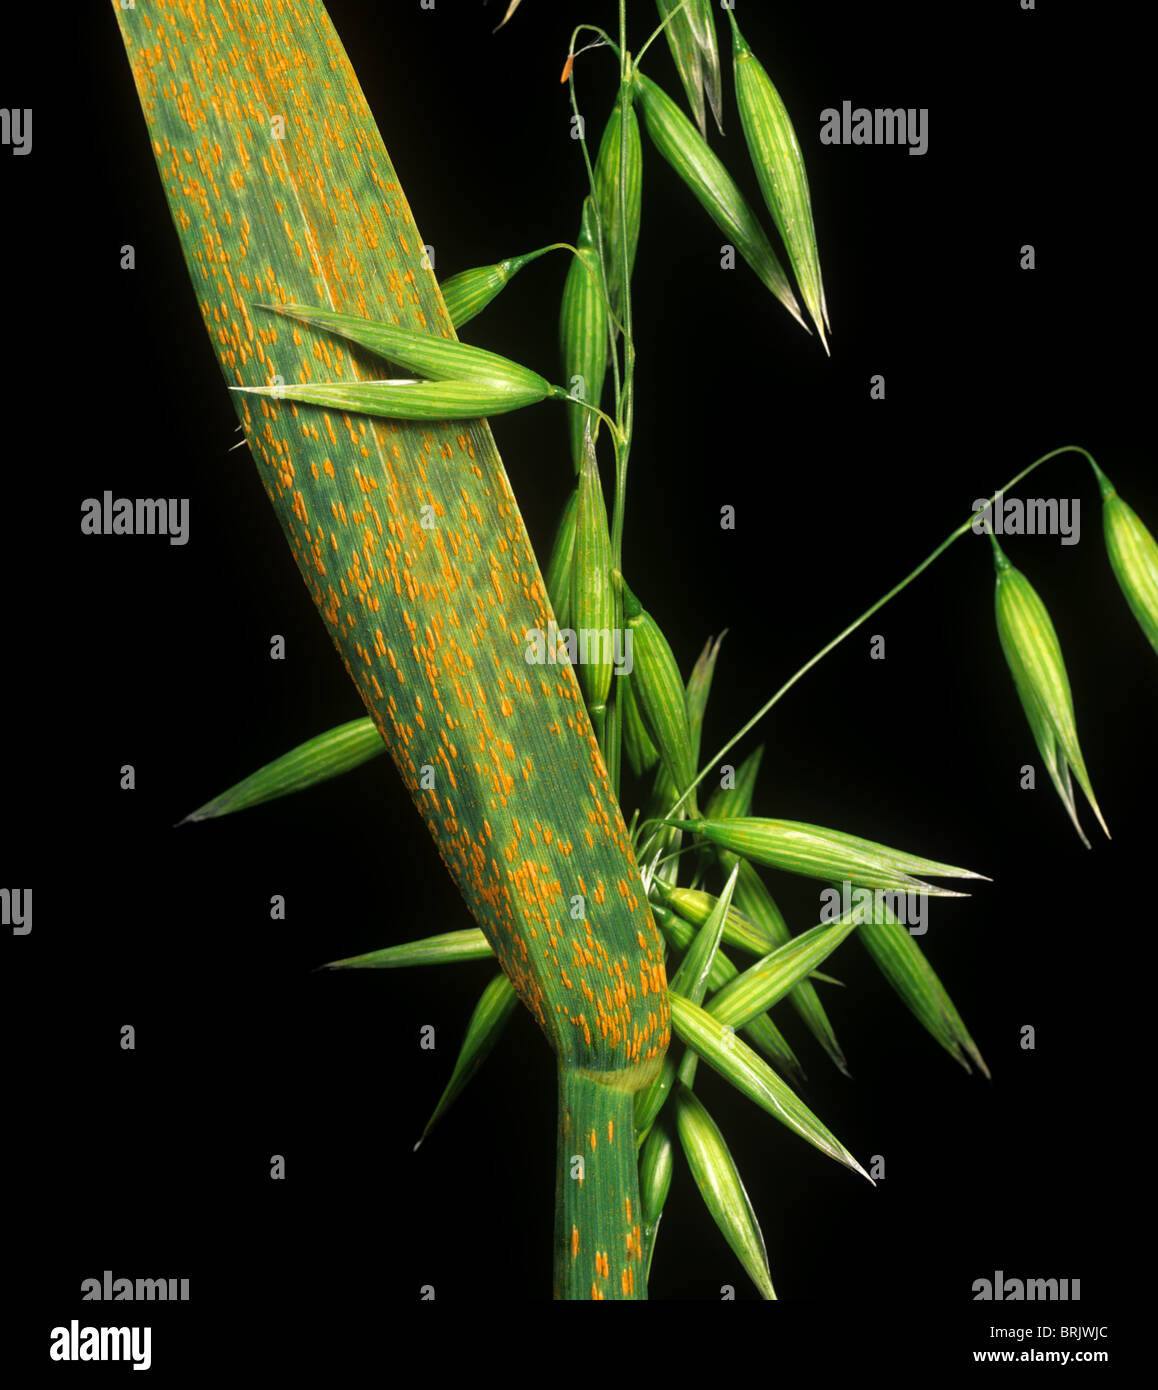 Crown rust (Puccinia coronata) on oats flagleaf Stock Photo